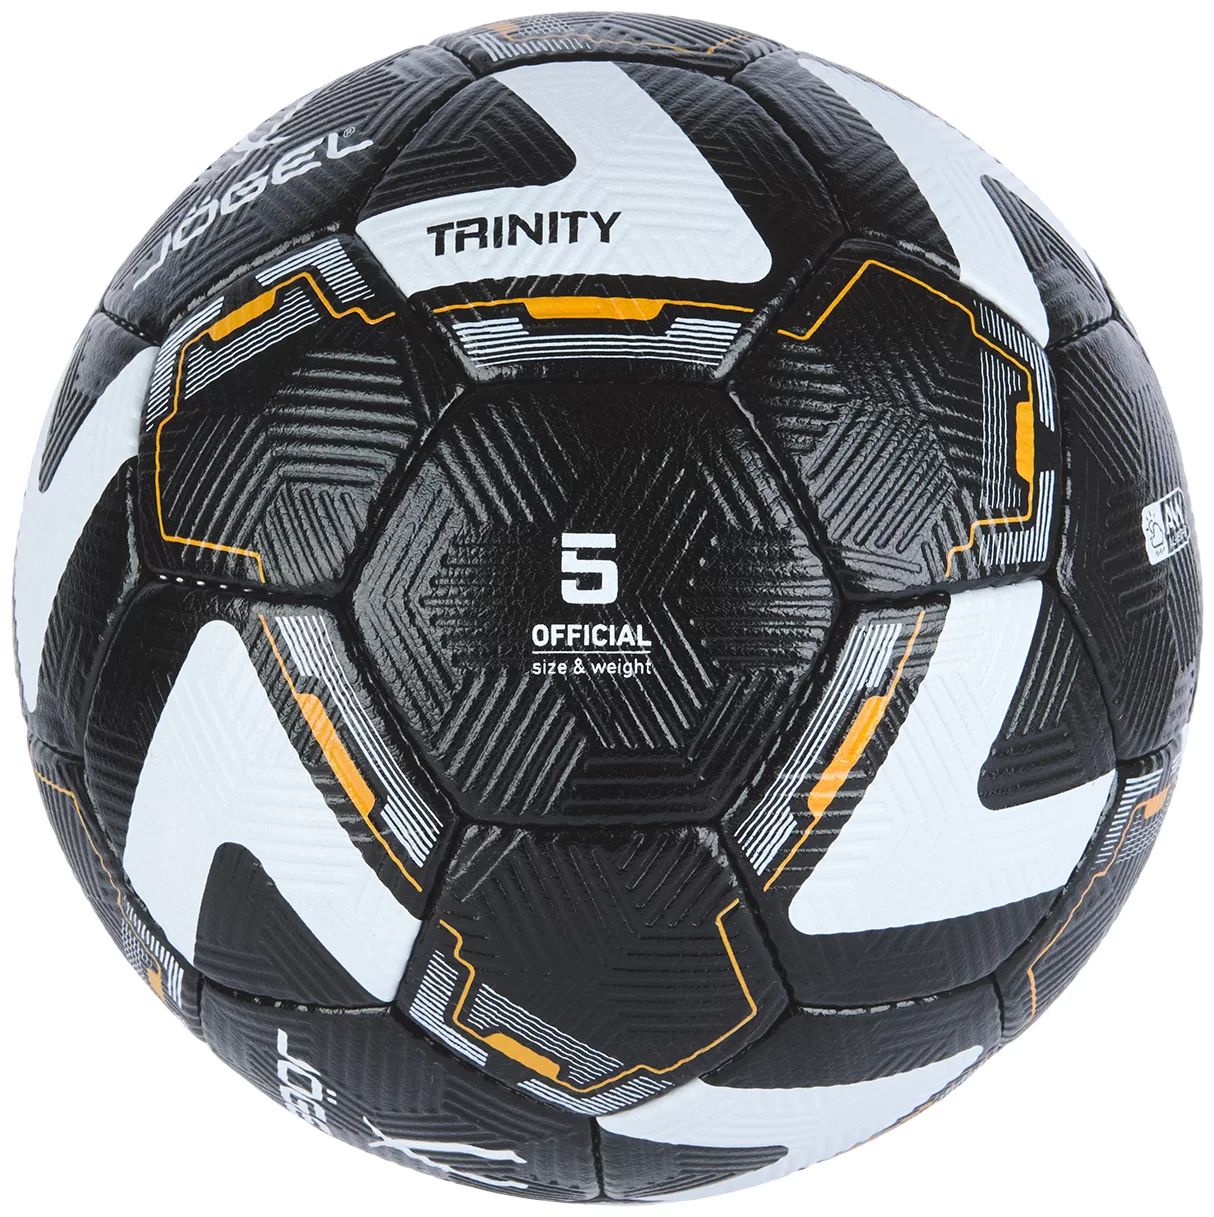 Фото Мяч футбольный Jogel Trinity №5 (BC20) 17604 со склада магазина СпортЕВ